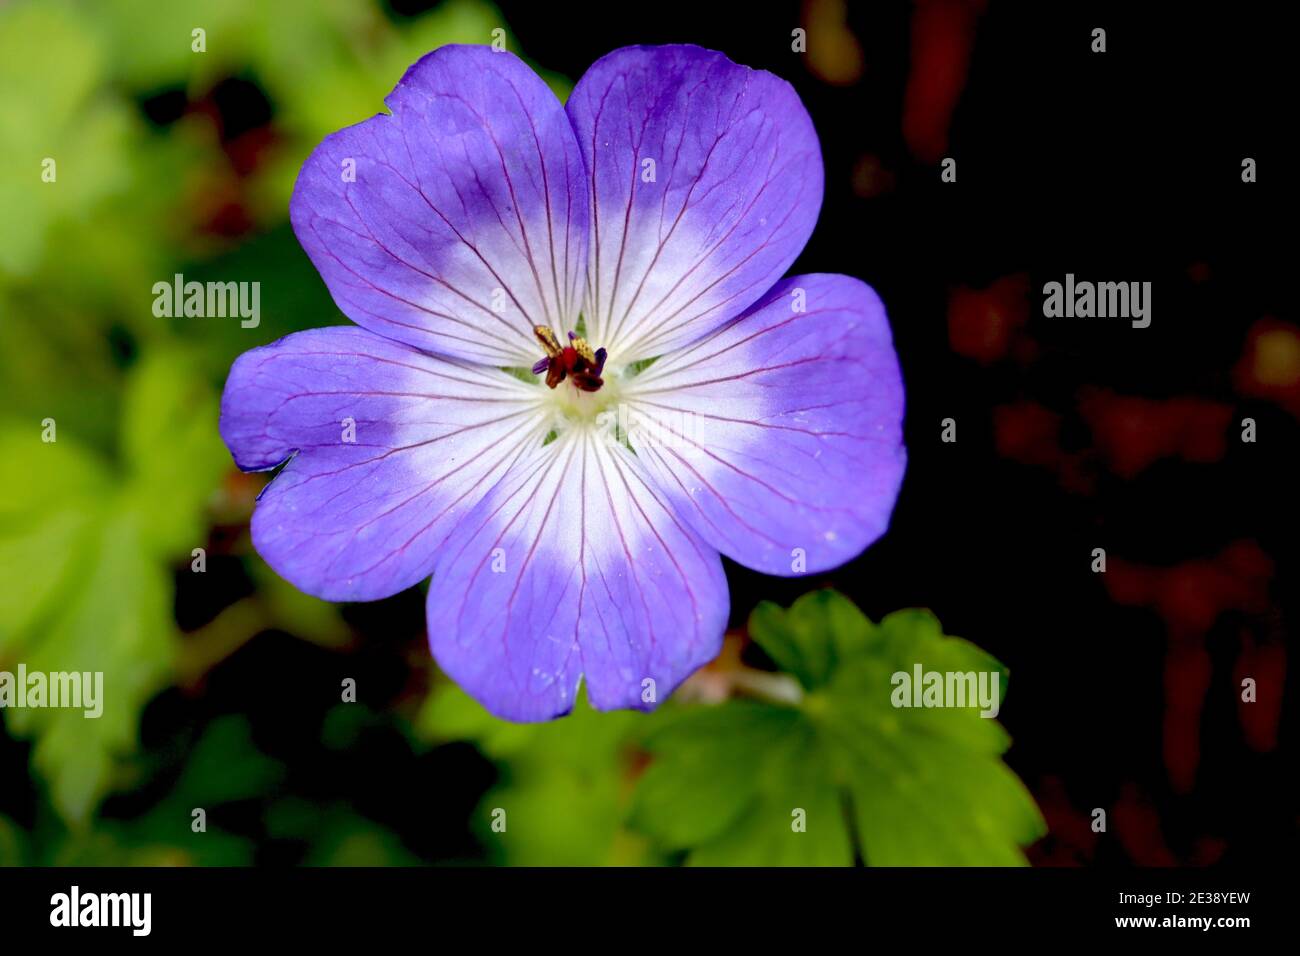 Geranium ‘Rozanne’ Geranium Gerwat – violet blue flowers with white centre and purple radial veins,  January, England, UK Stock Photo